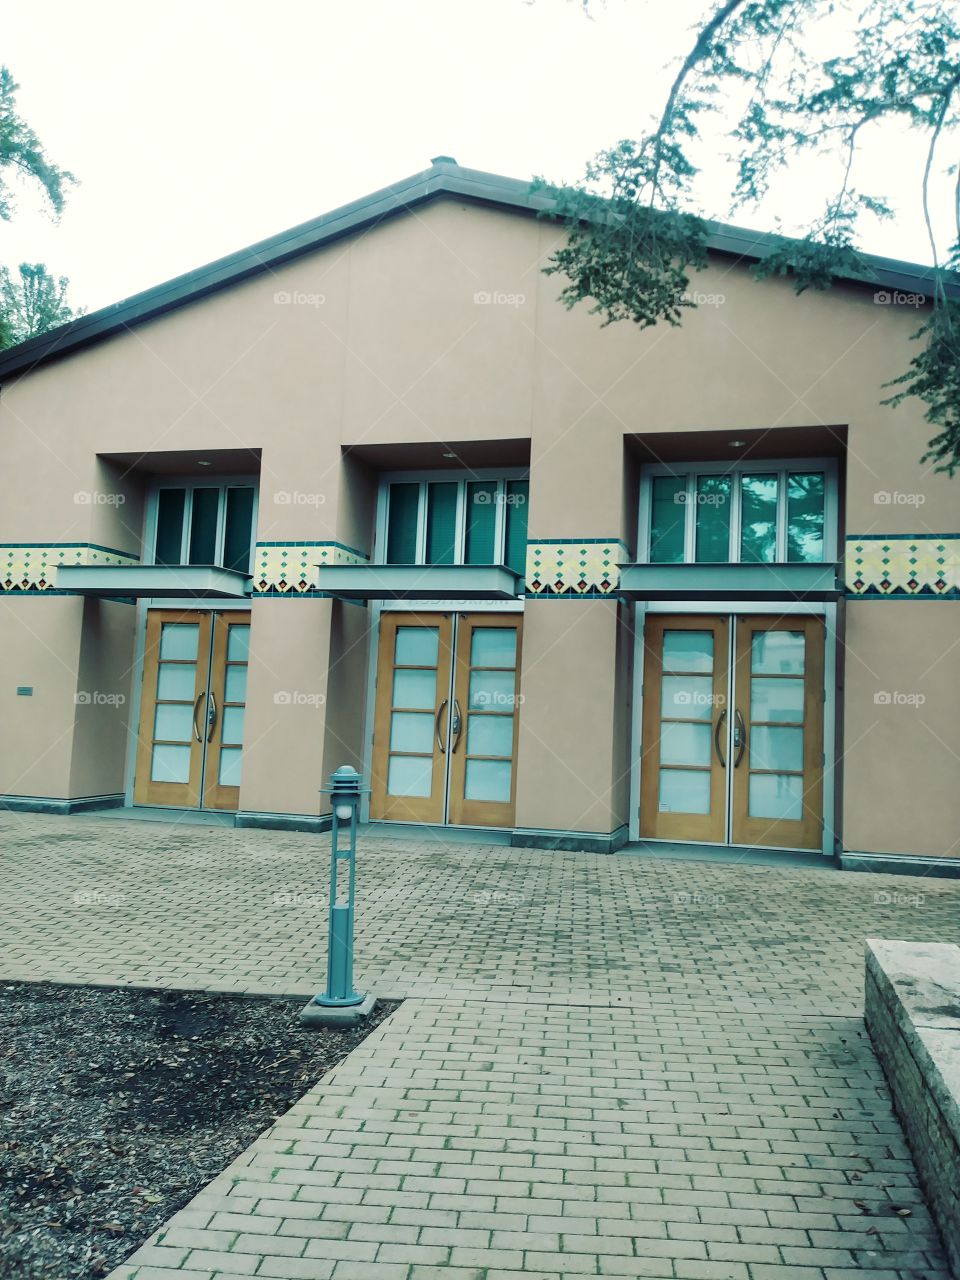 Orinda Public Library